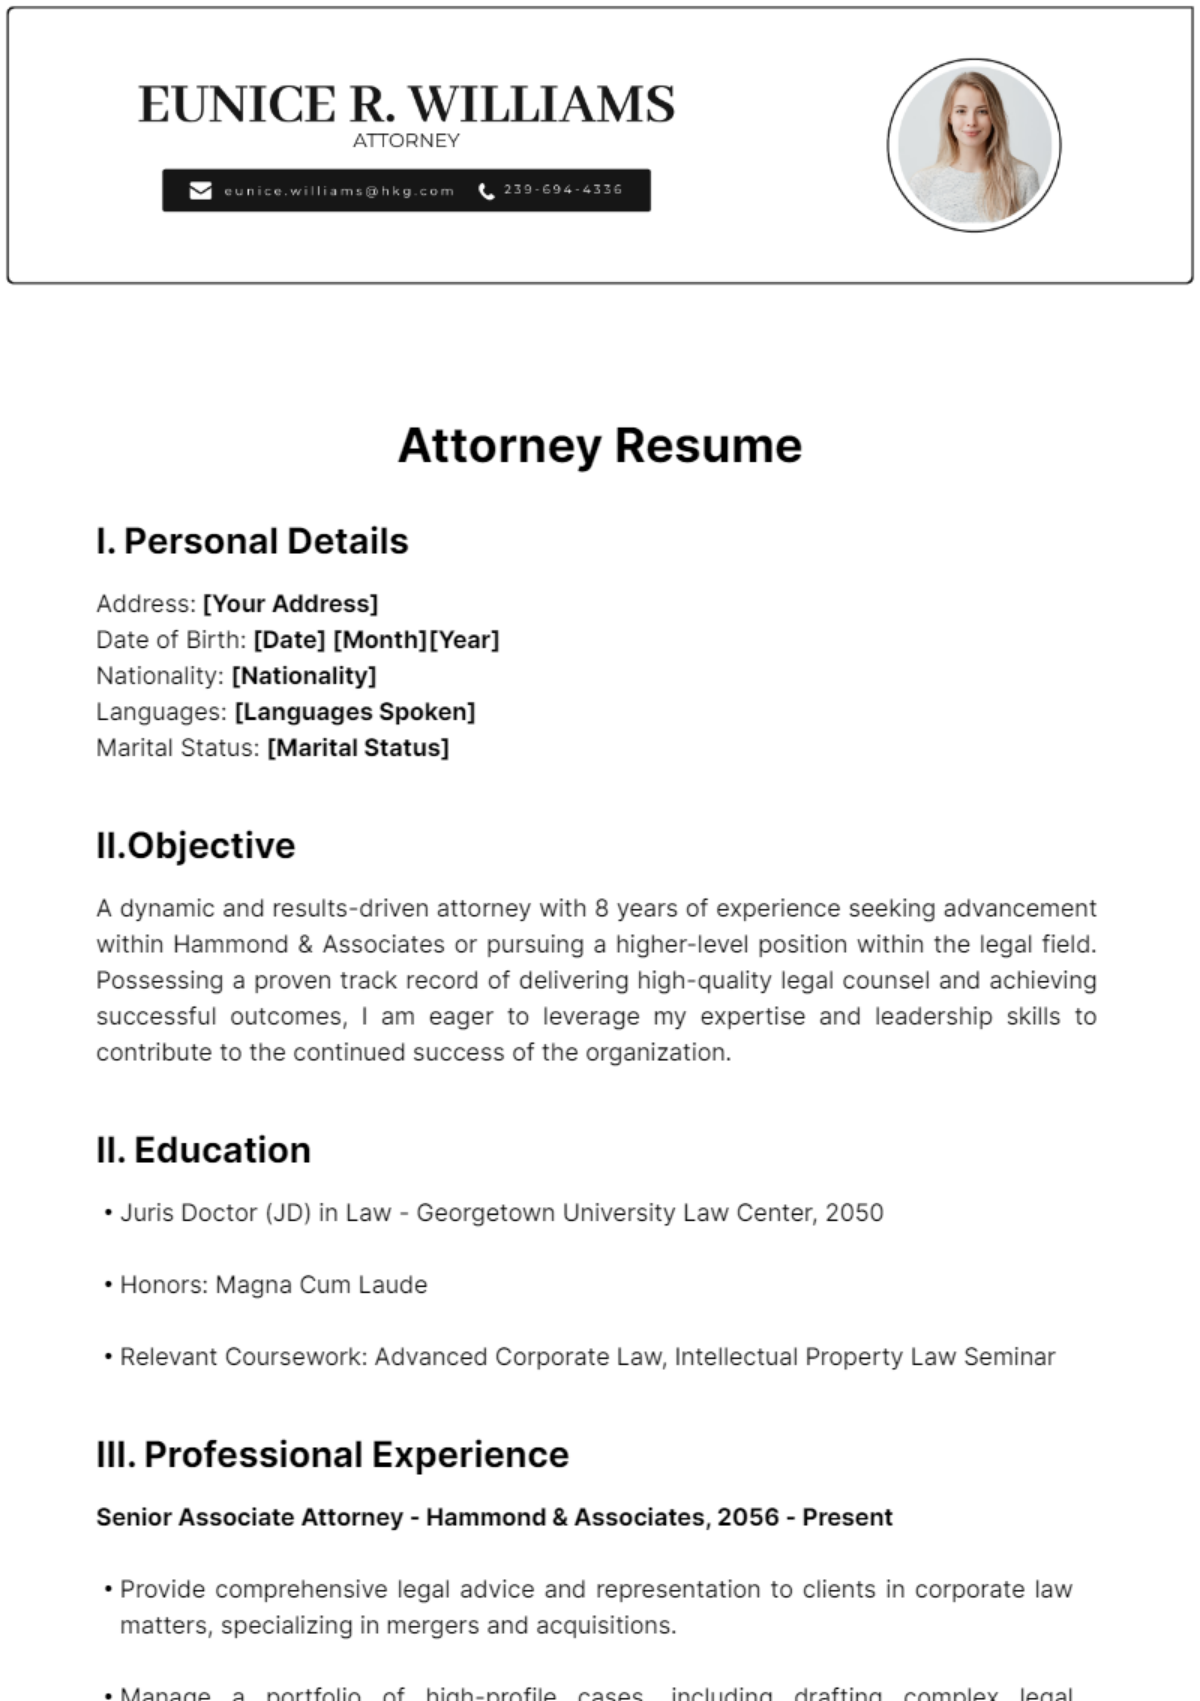 Attorney Resume Template